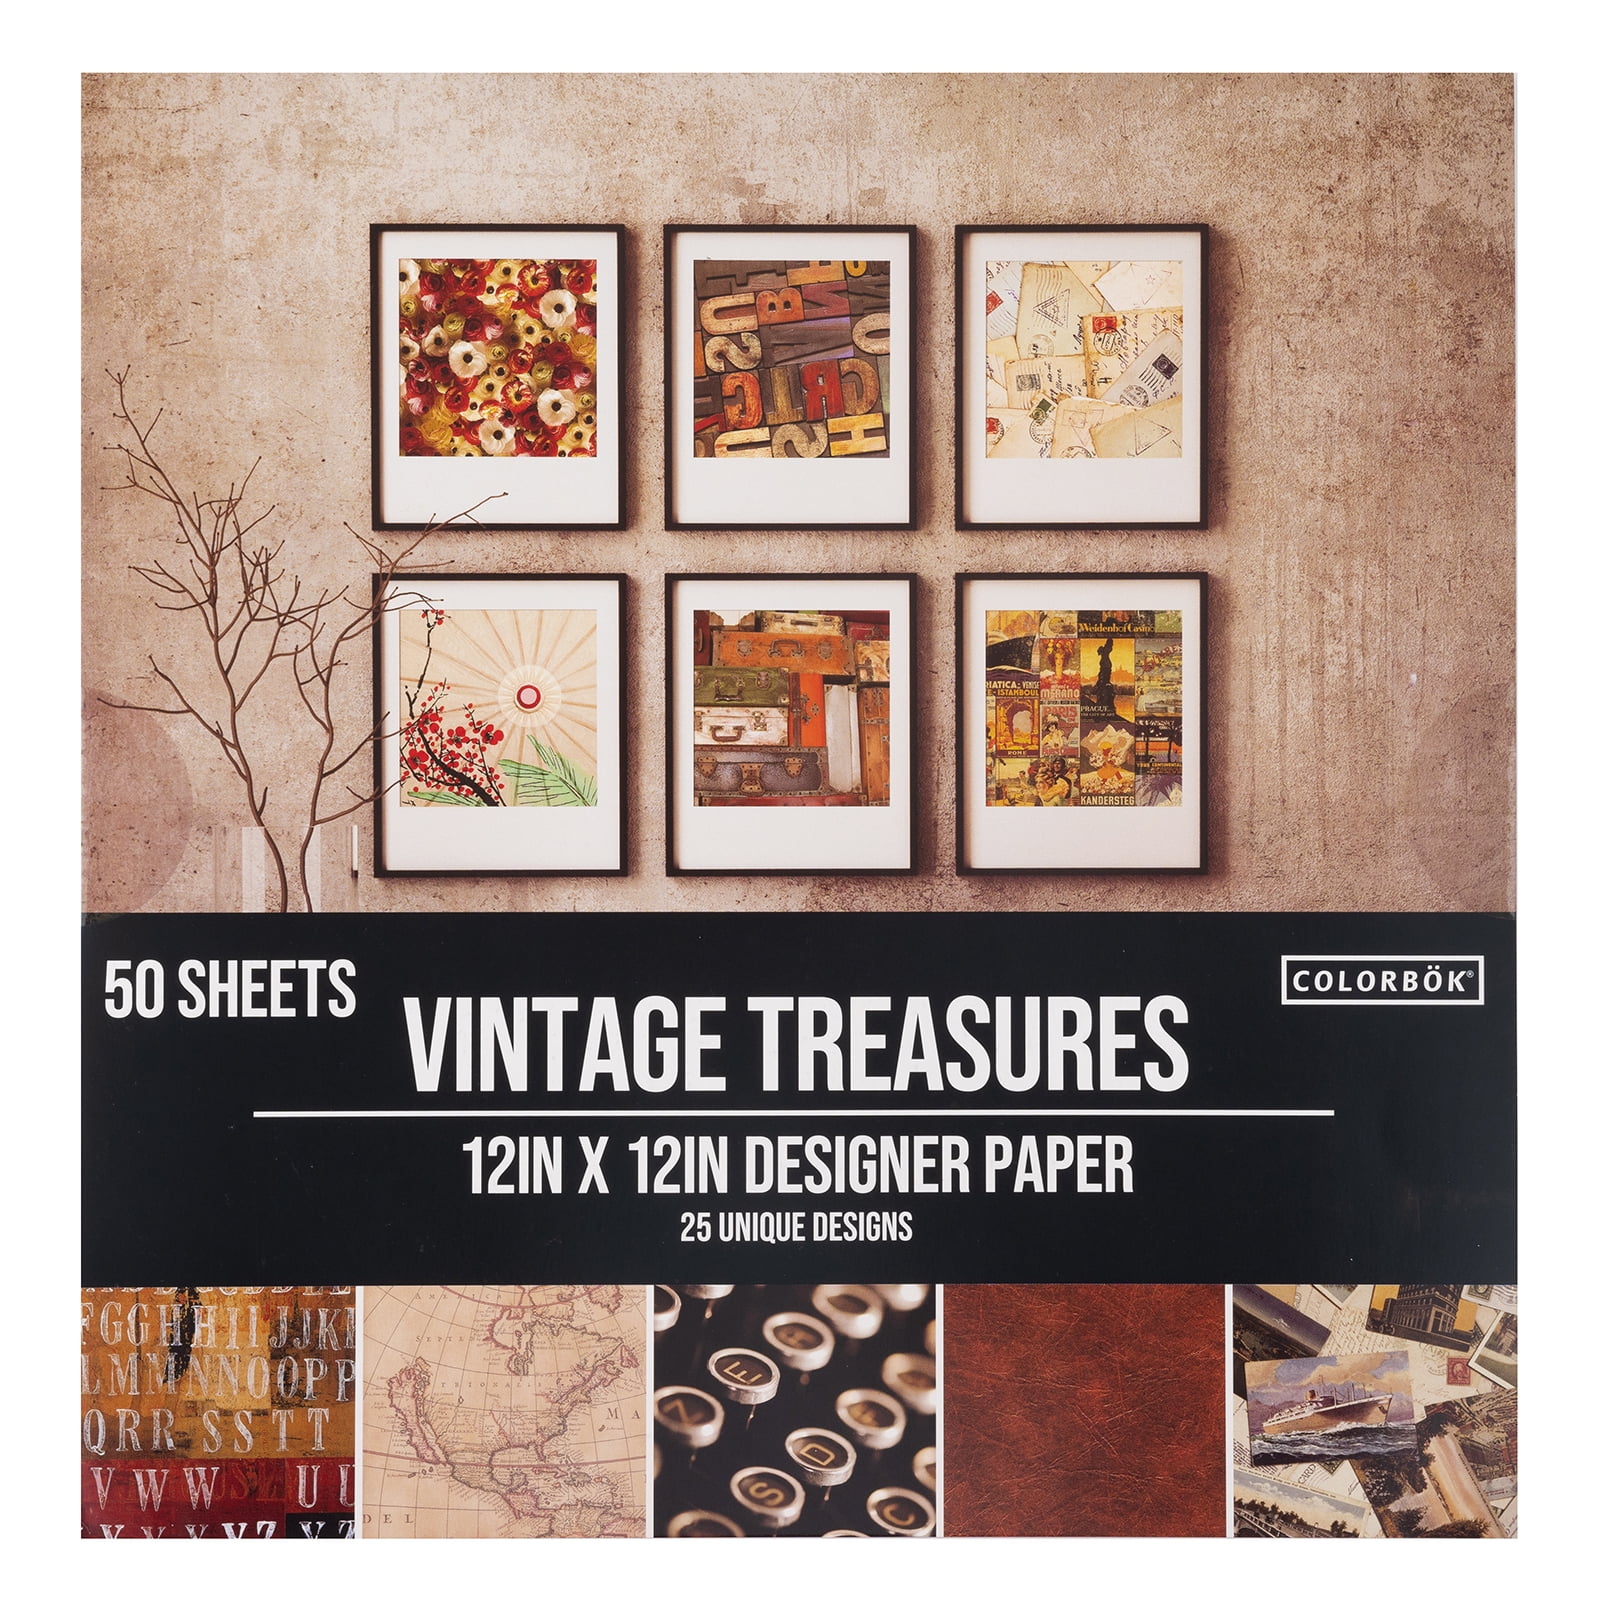 Colorbok Designer Paper Pad Vintage Treasures,68117E 2 Pack 12 x 12 